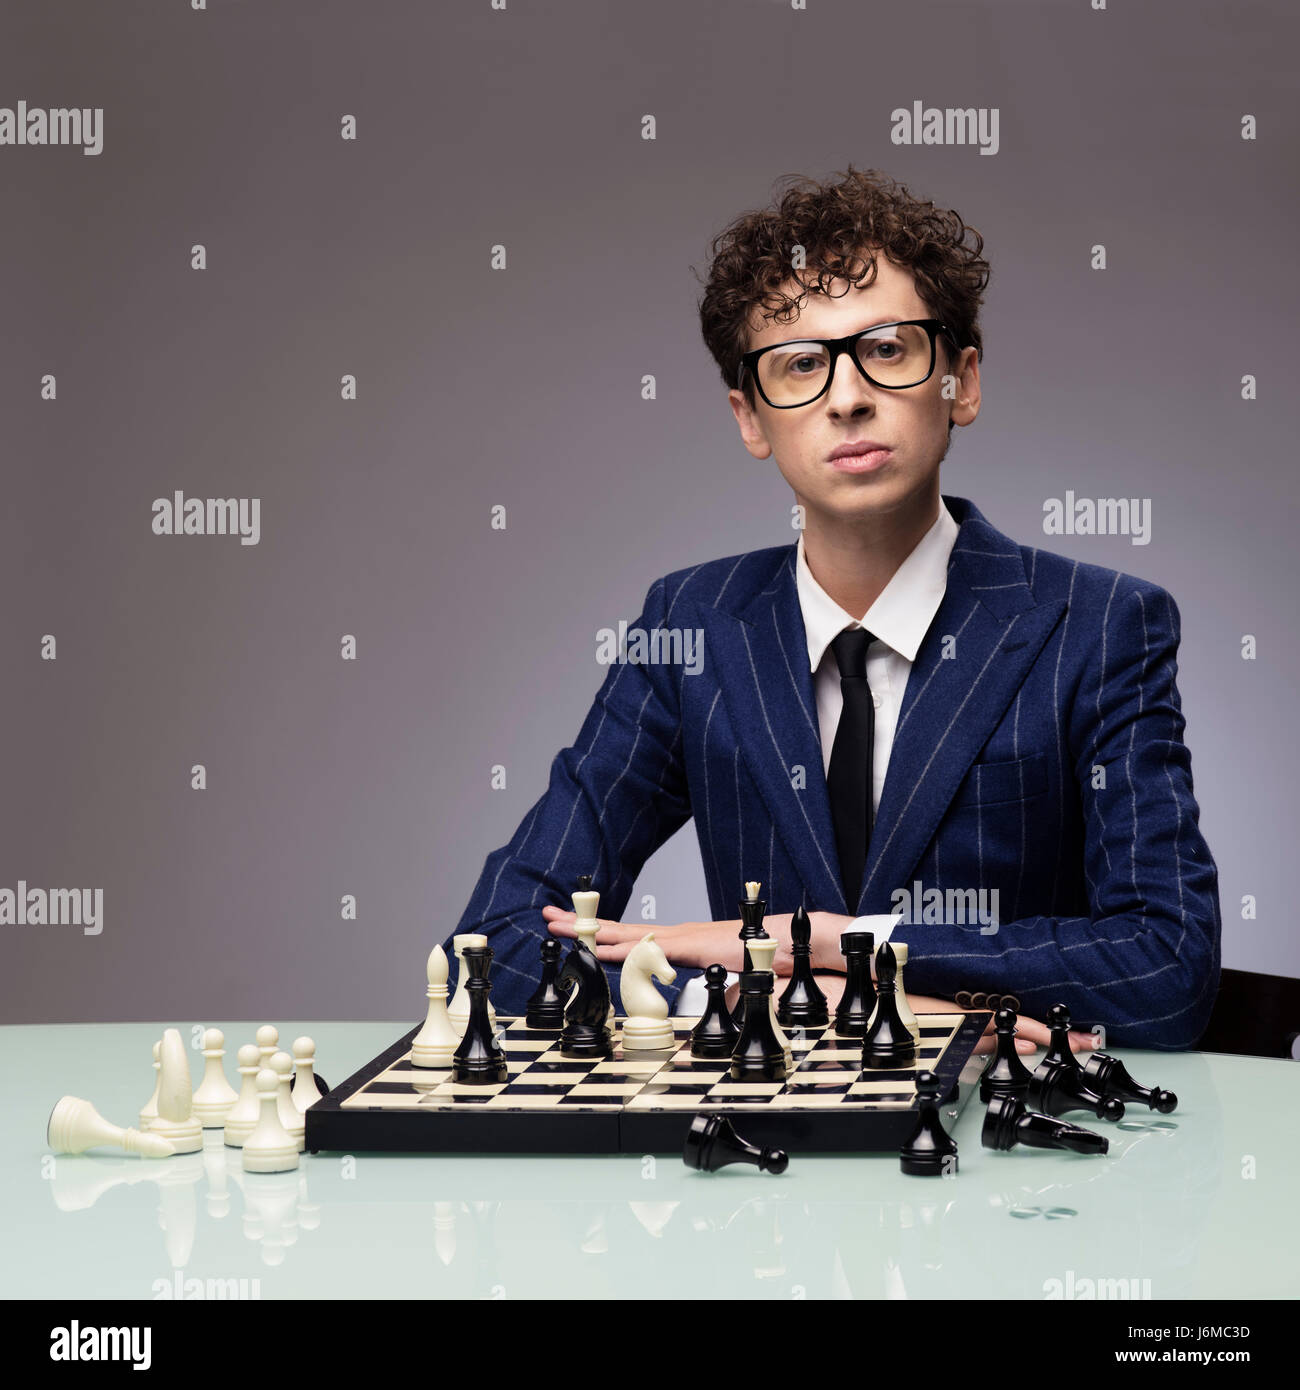 Studio portrait of successful man playing chess Stock Photo